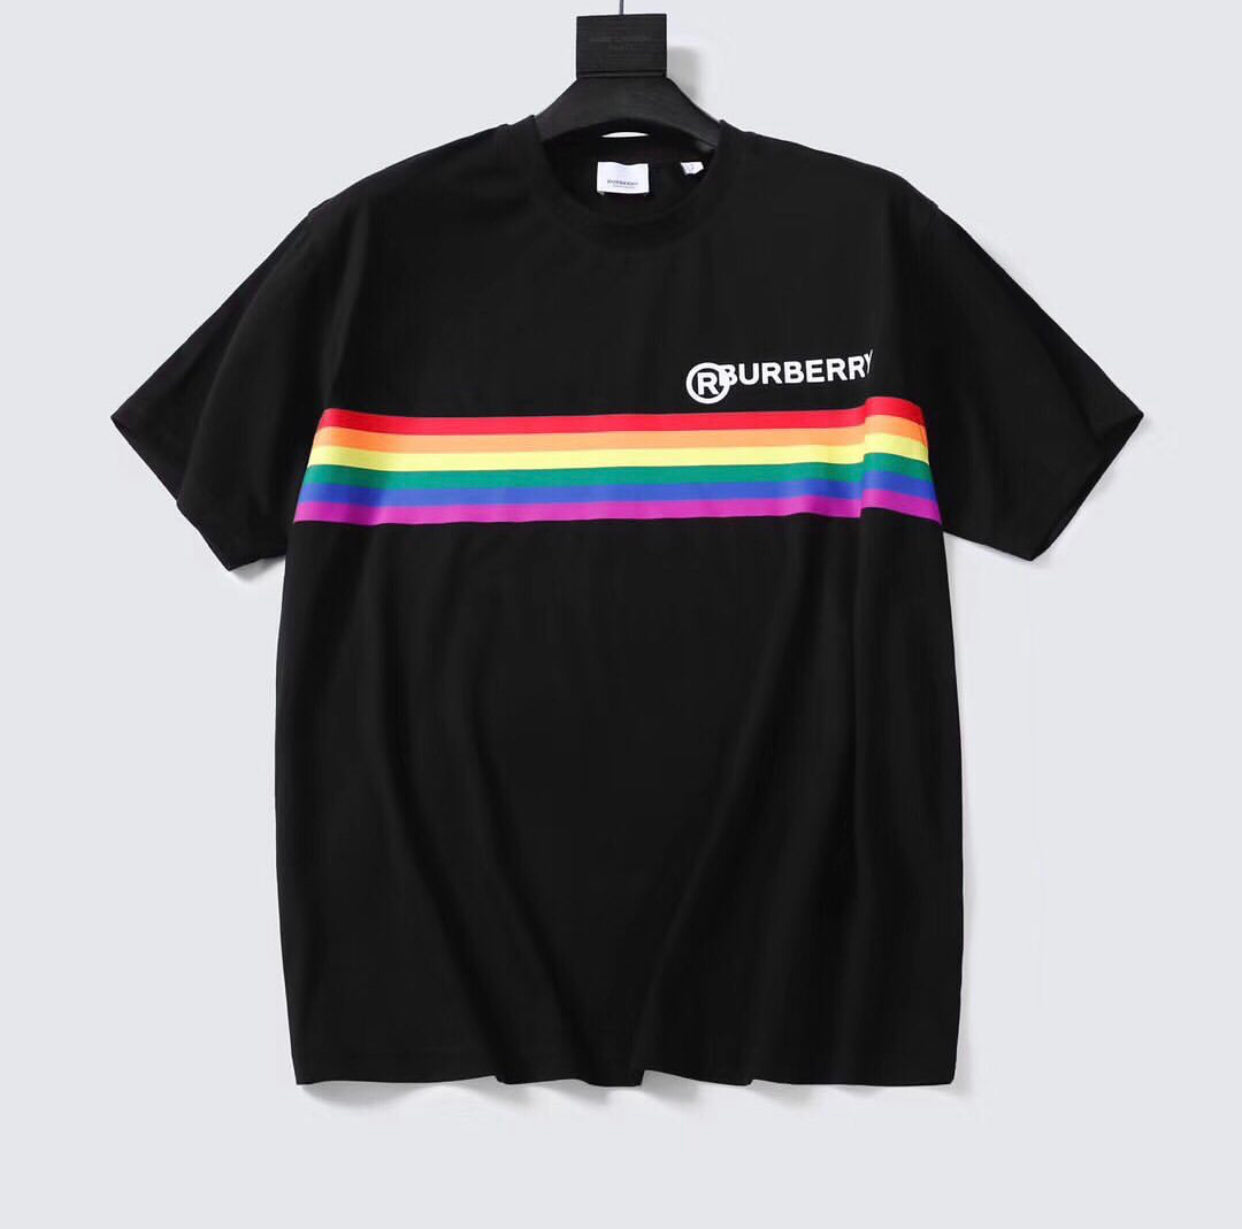 burberry t shirt rainbow